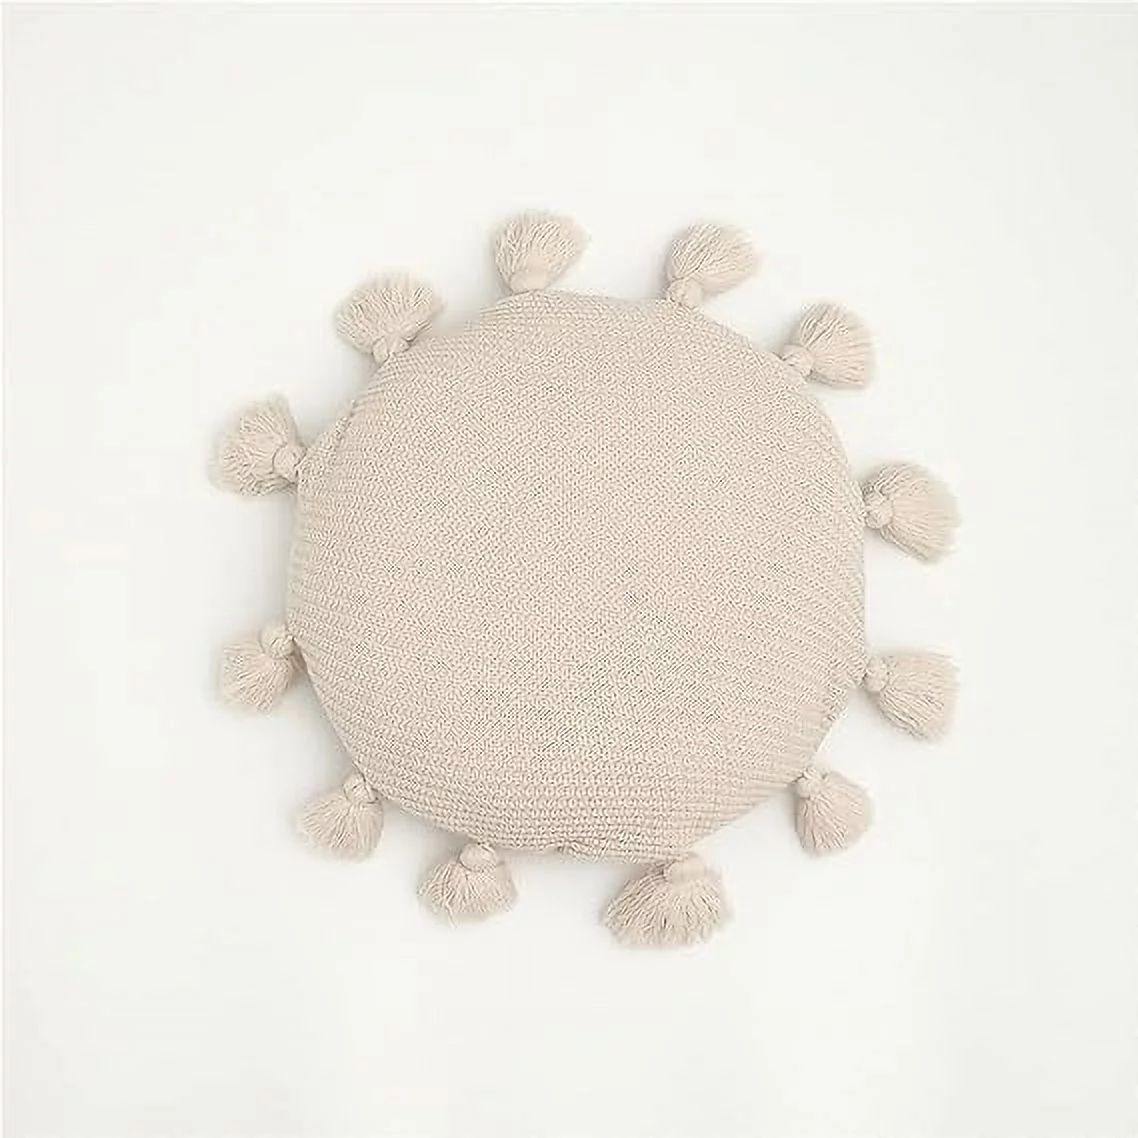 Nvzi Decorative Round Fringe Throw Pillow with Inserts Woven Textured (Beige, Diameter 16") | Walmart (US)